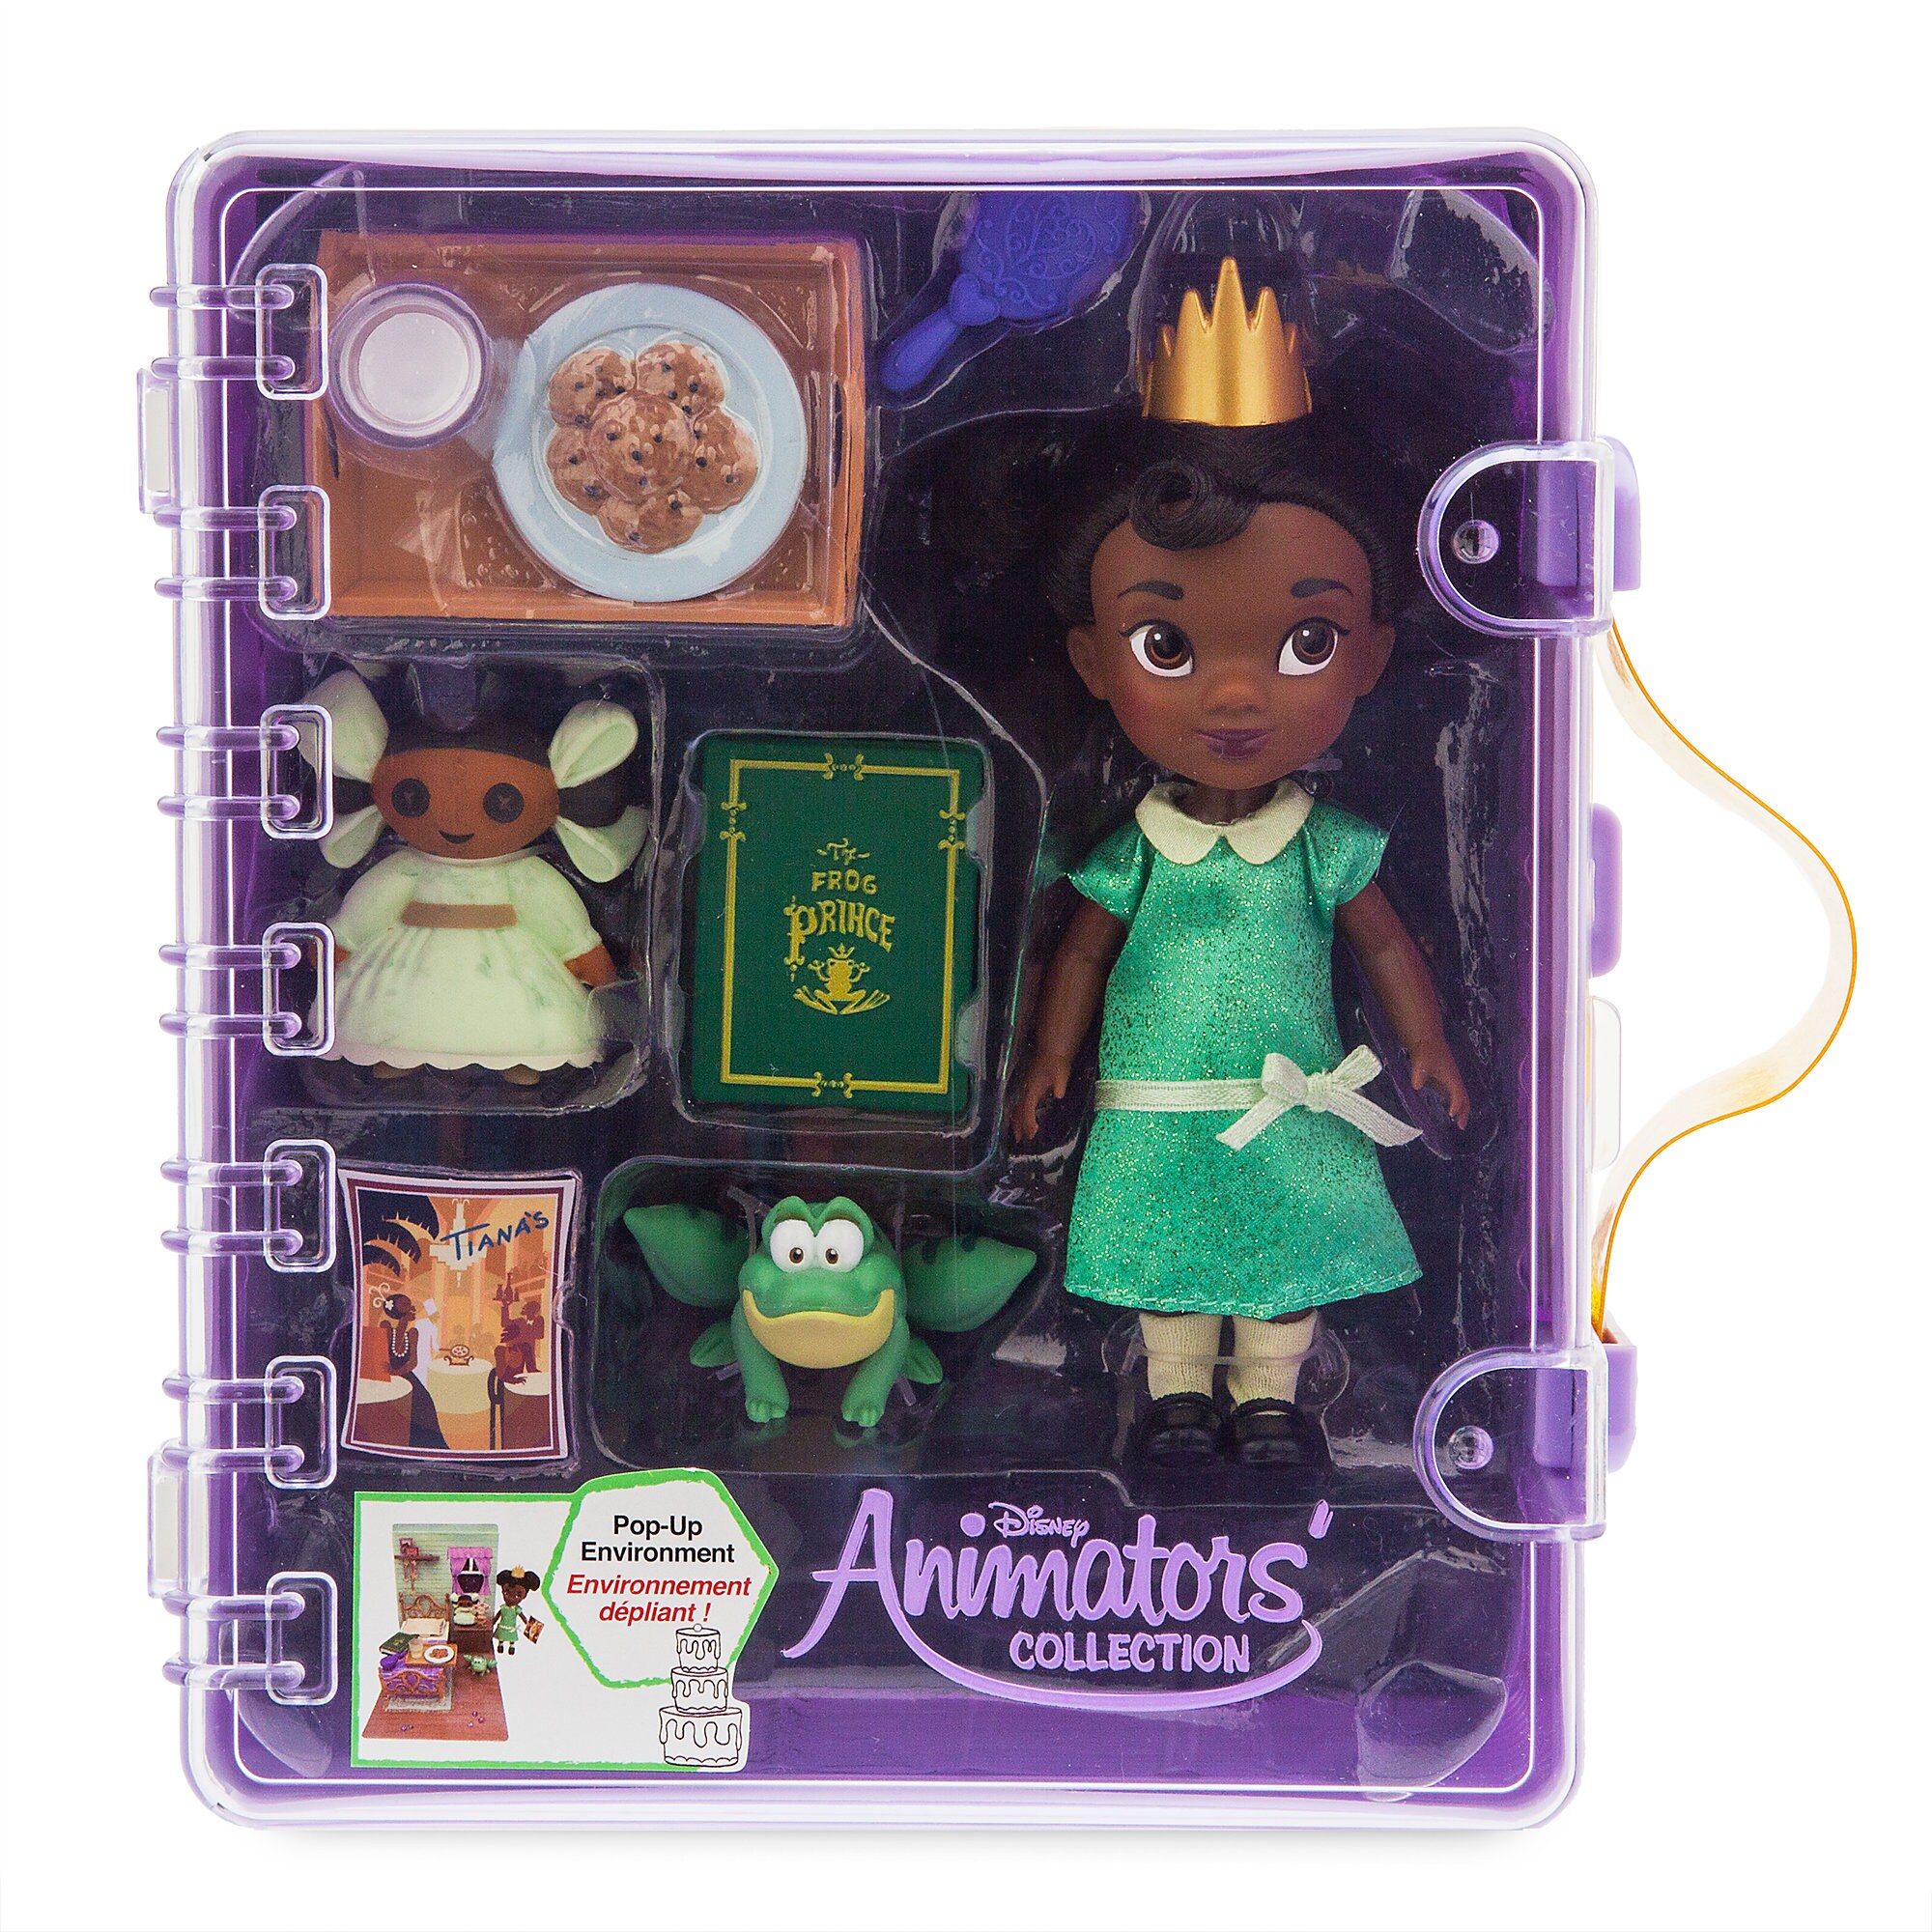 Disney Animators Collection Tiana Mini Doll Play Set Is Here Now Dis Merchandise News